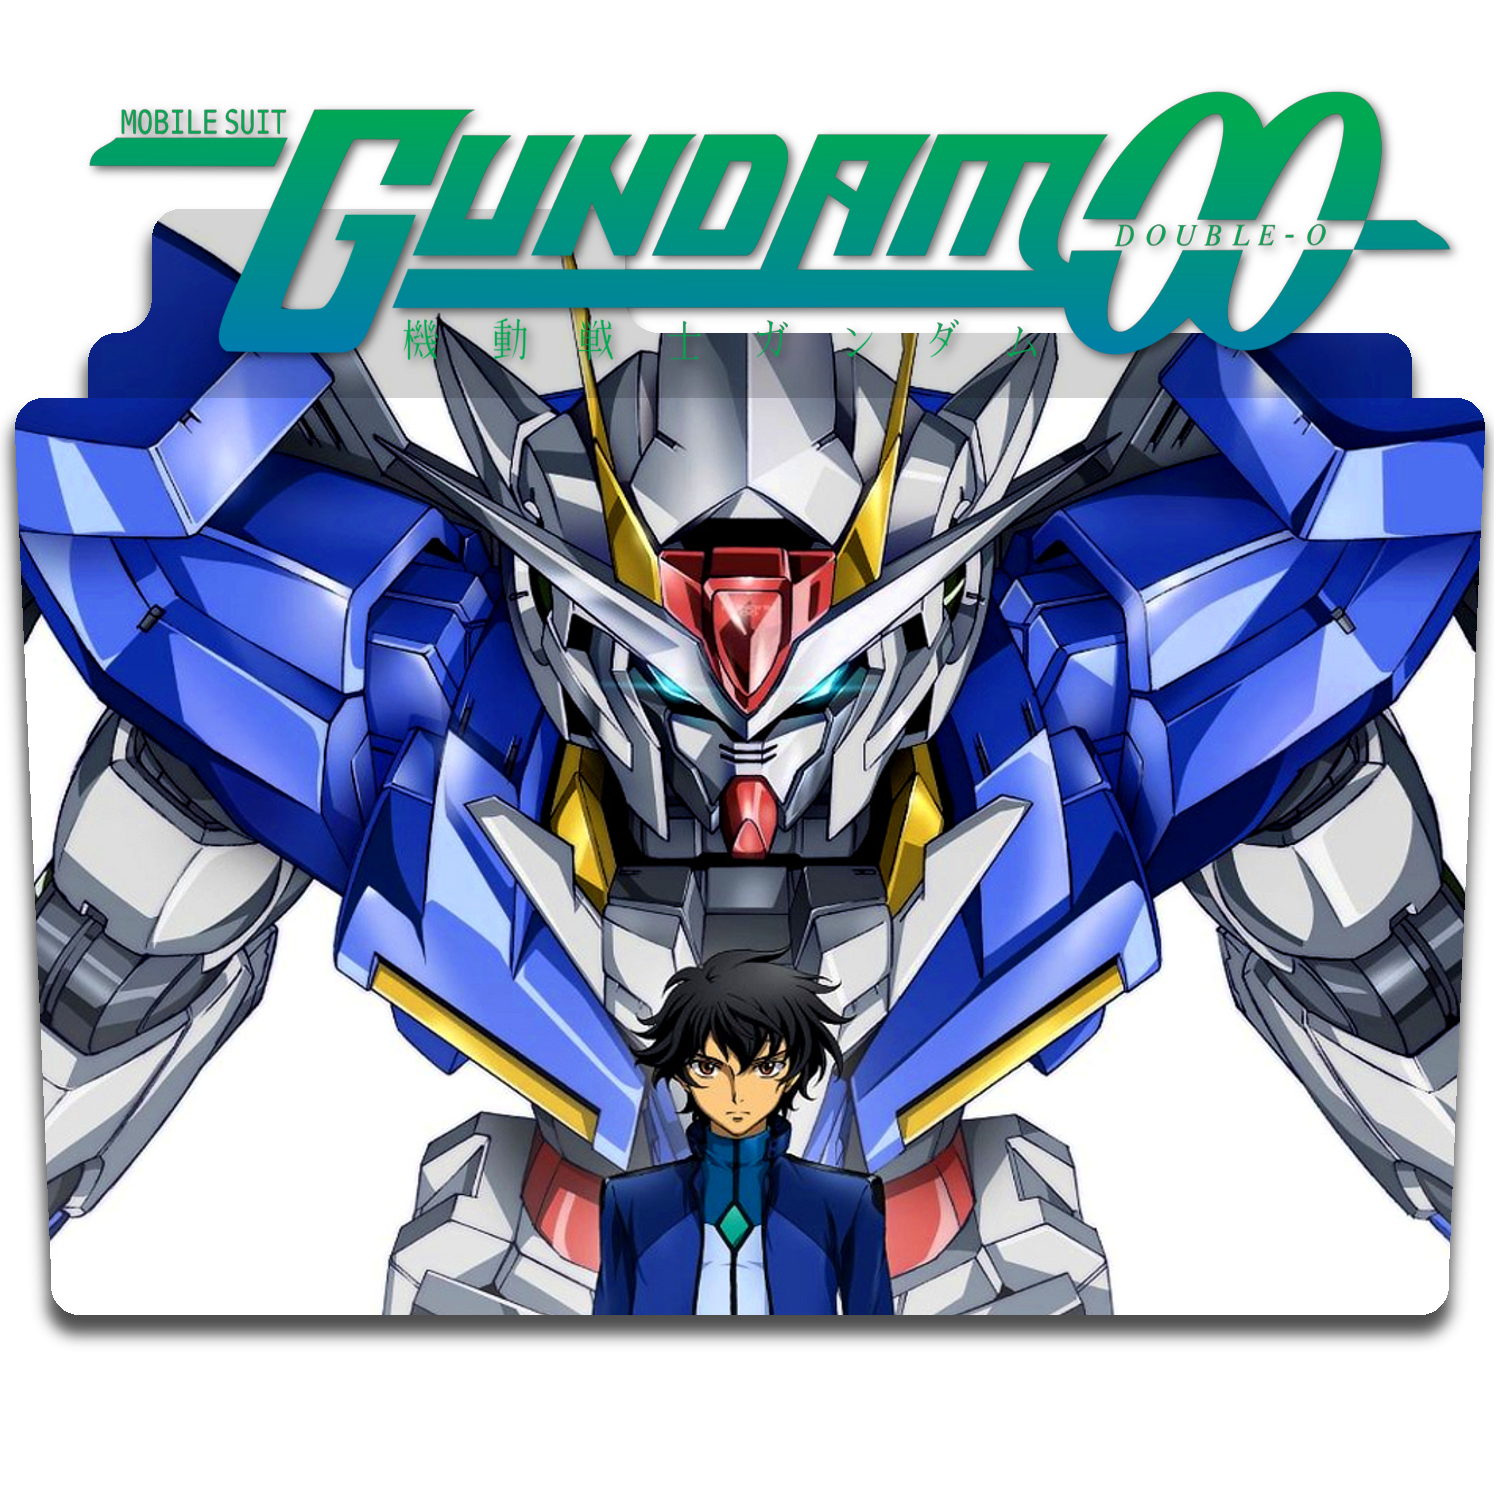 Gundam Build Divers - RE:RISE Season 2 Folder Icon by Edgina36 on DeviantArt